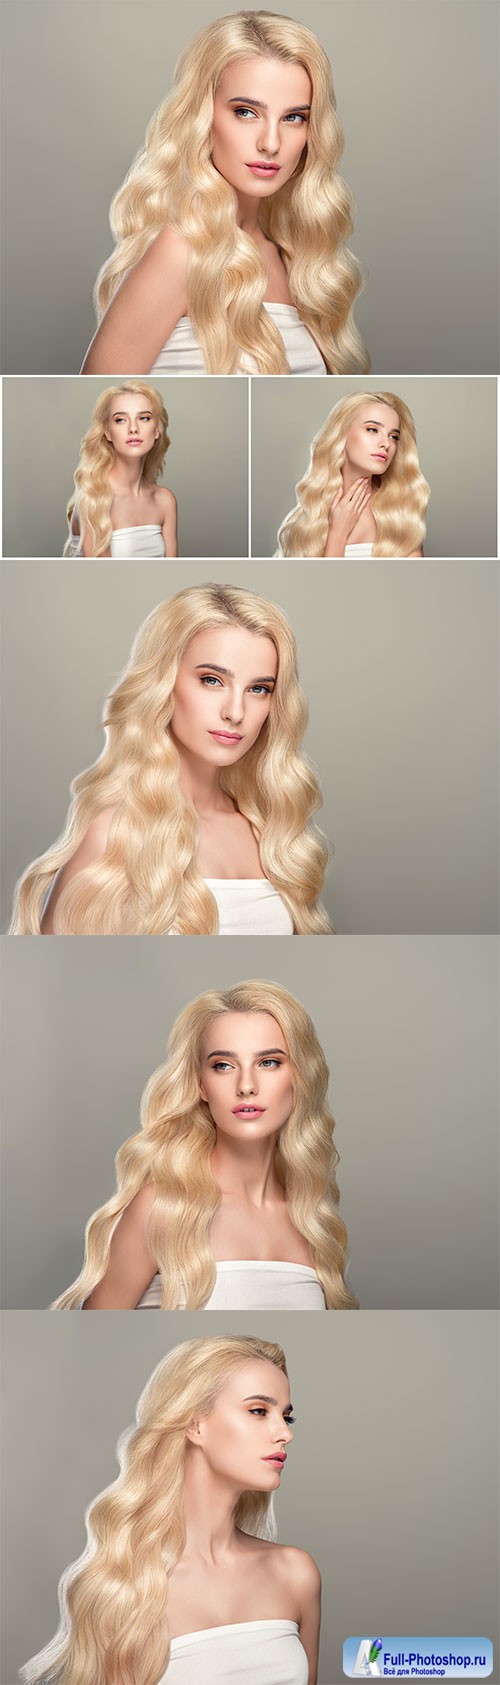 Beautiful girl with wavy white hair